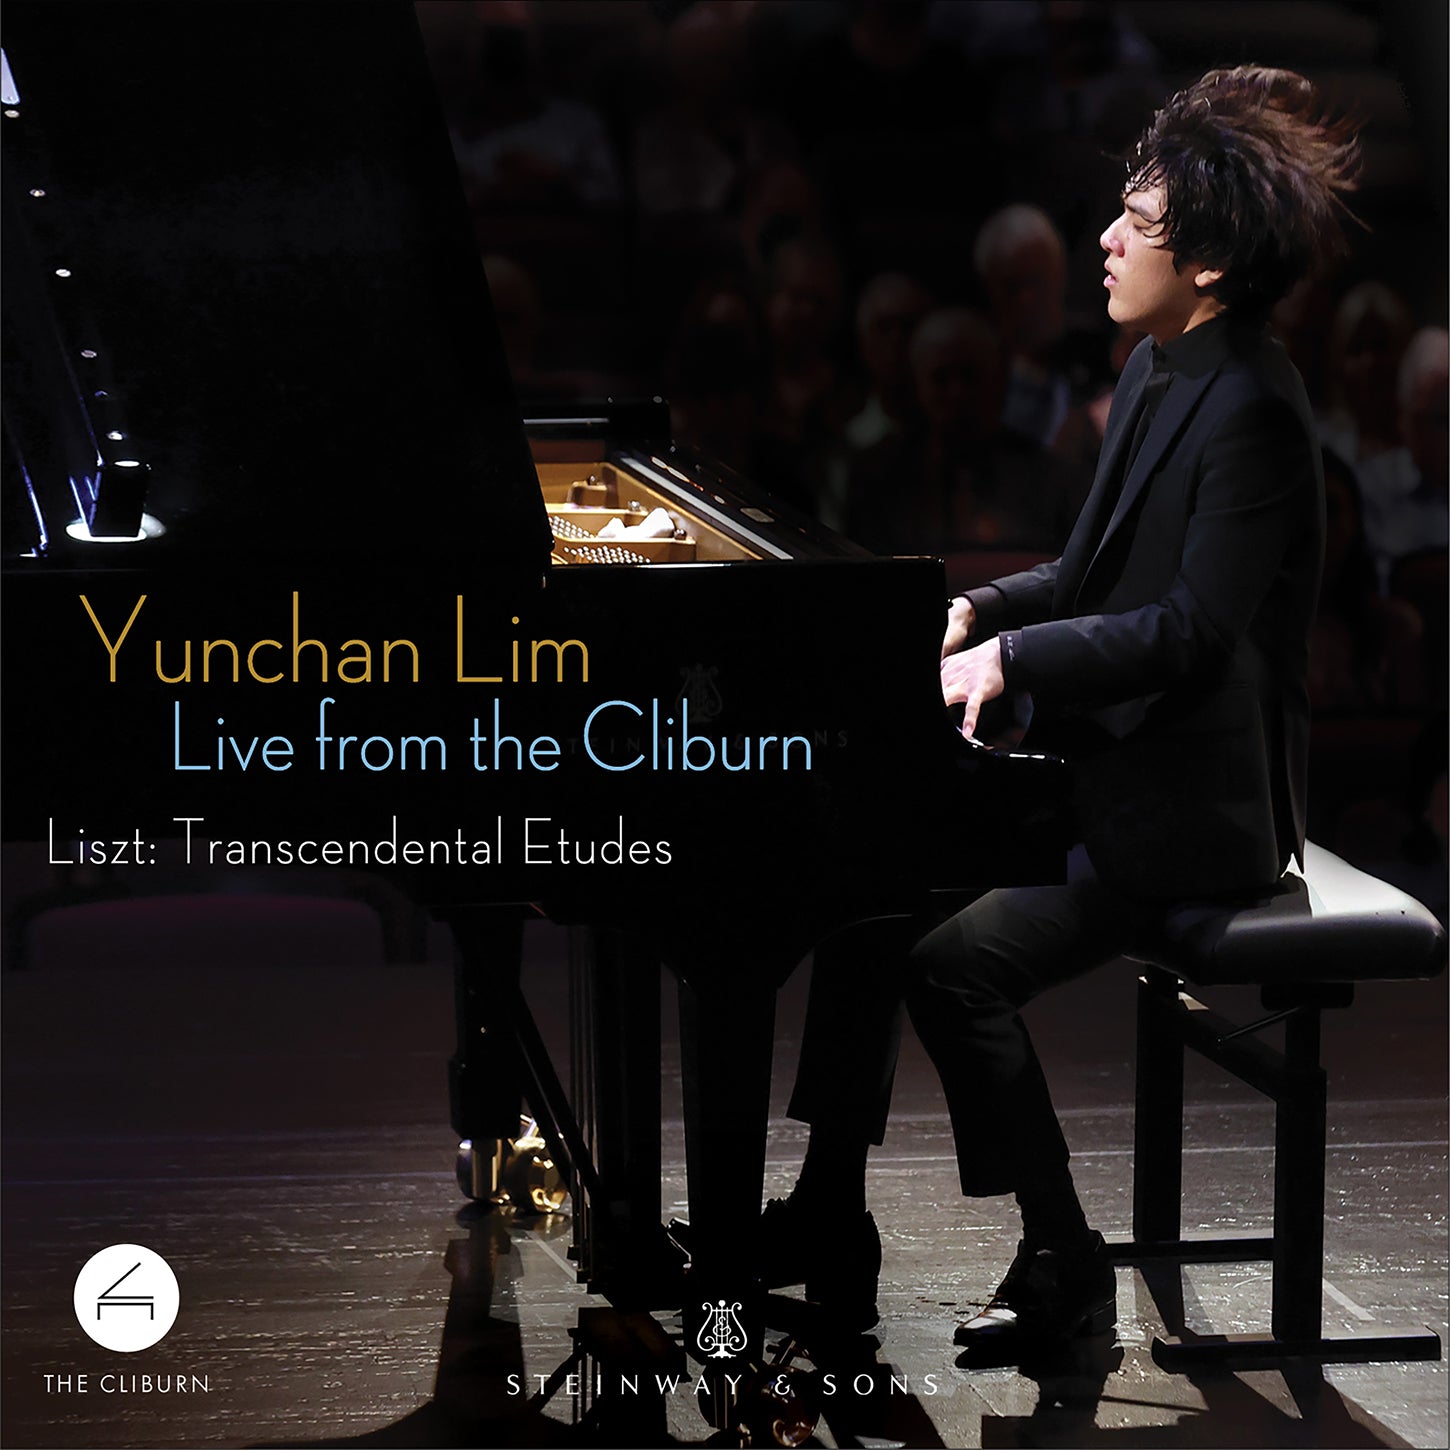 Yunchan Lim Live from The Cliburn - Liszt: Transcendental Etudes